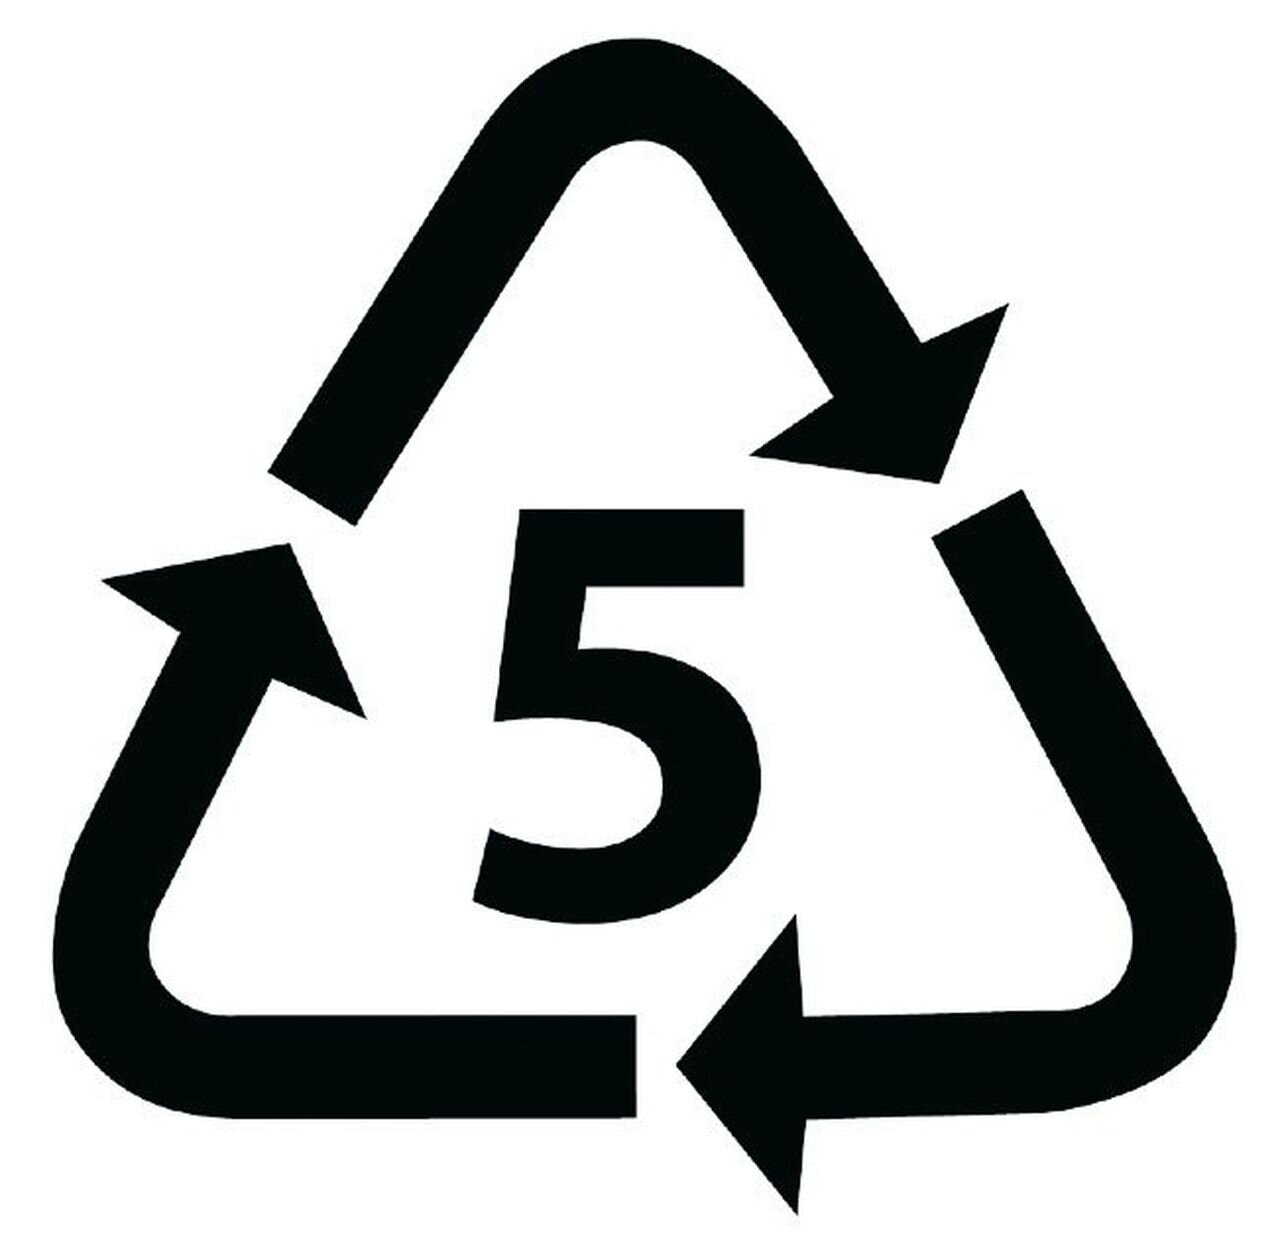 no-5-recycle-symboljpg-7e51a72ebe56ac4b.jpg